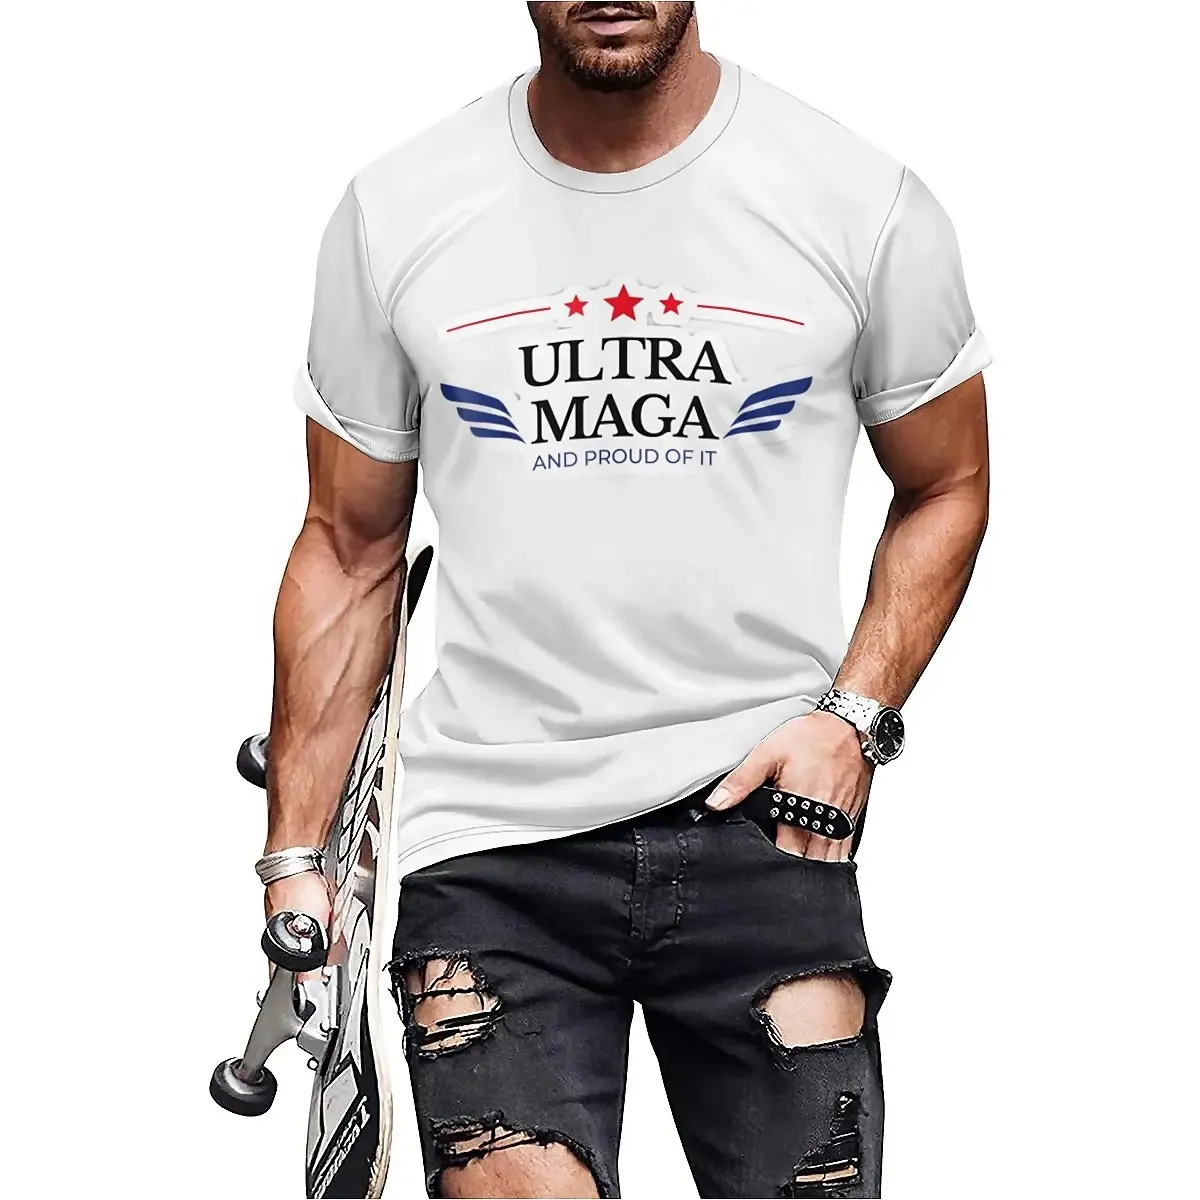 Kaus kustom pria tim besar kampanye Amerika logo kustom tren mode desain baru populer grosir